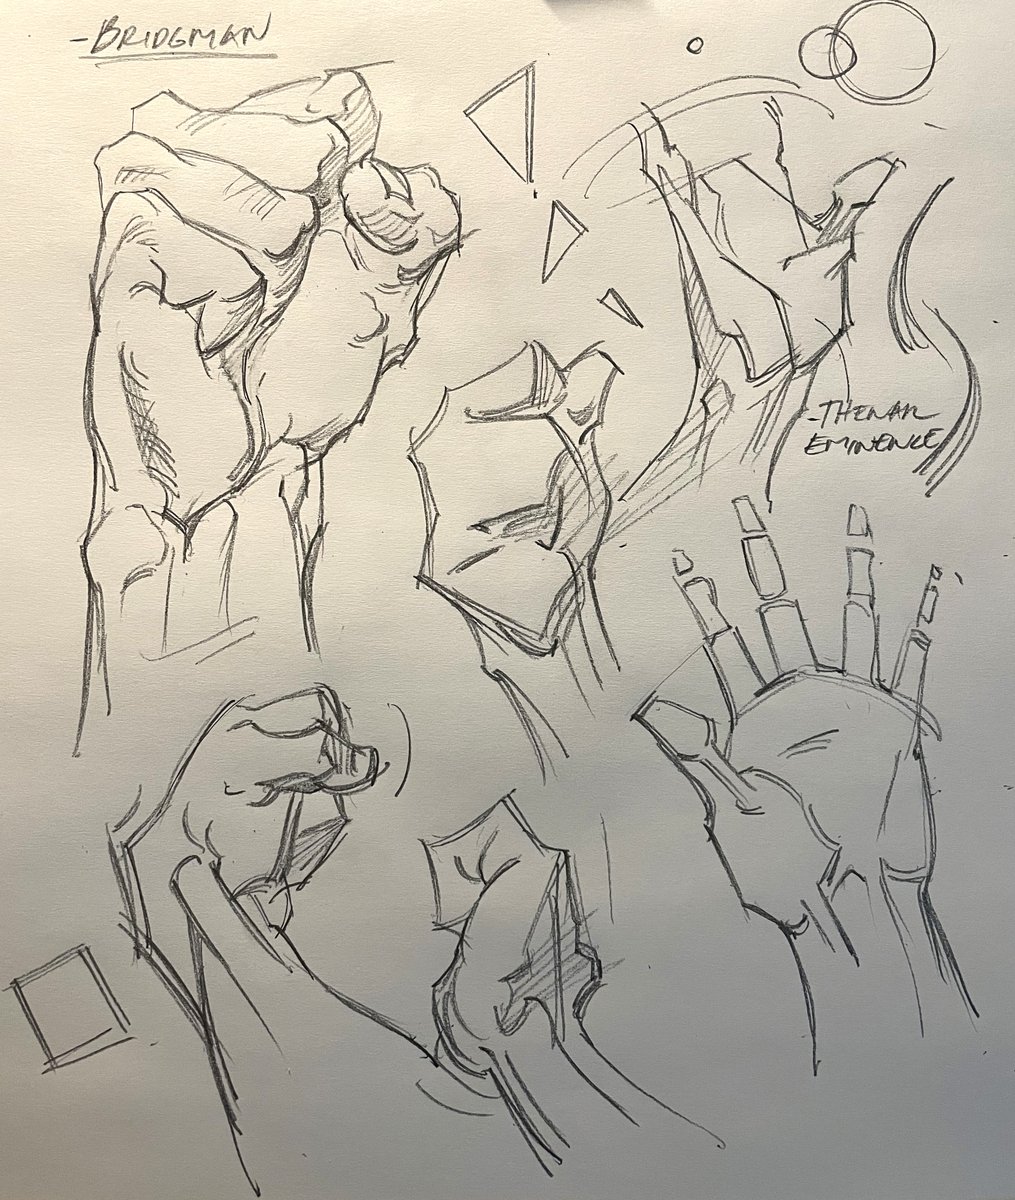 Morning Bridgman studies on the hand! #bridgman #pencilsketch #hands #anatomy #humananatomy #sketchbook #traditionalart #drawing #sketching #thumb #palm #wrist #gottogetbetter #goals #figuredrawing #gesturedrawing